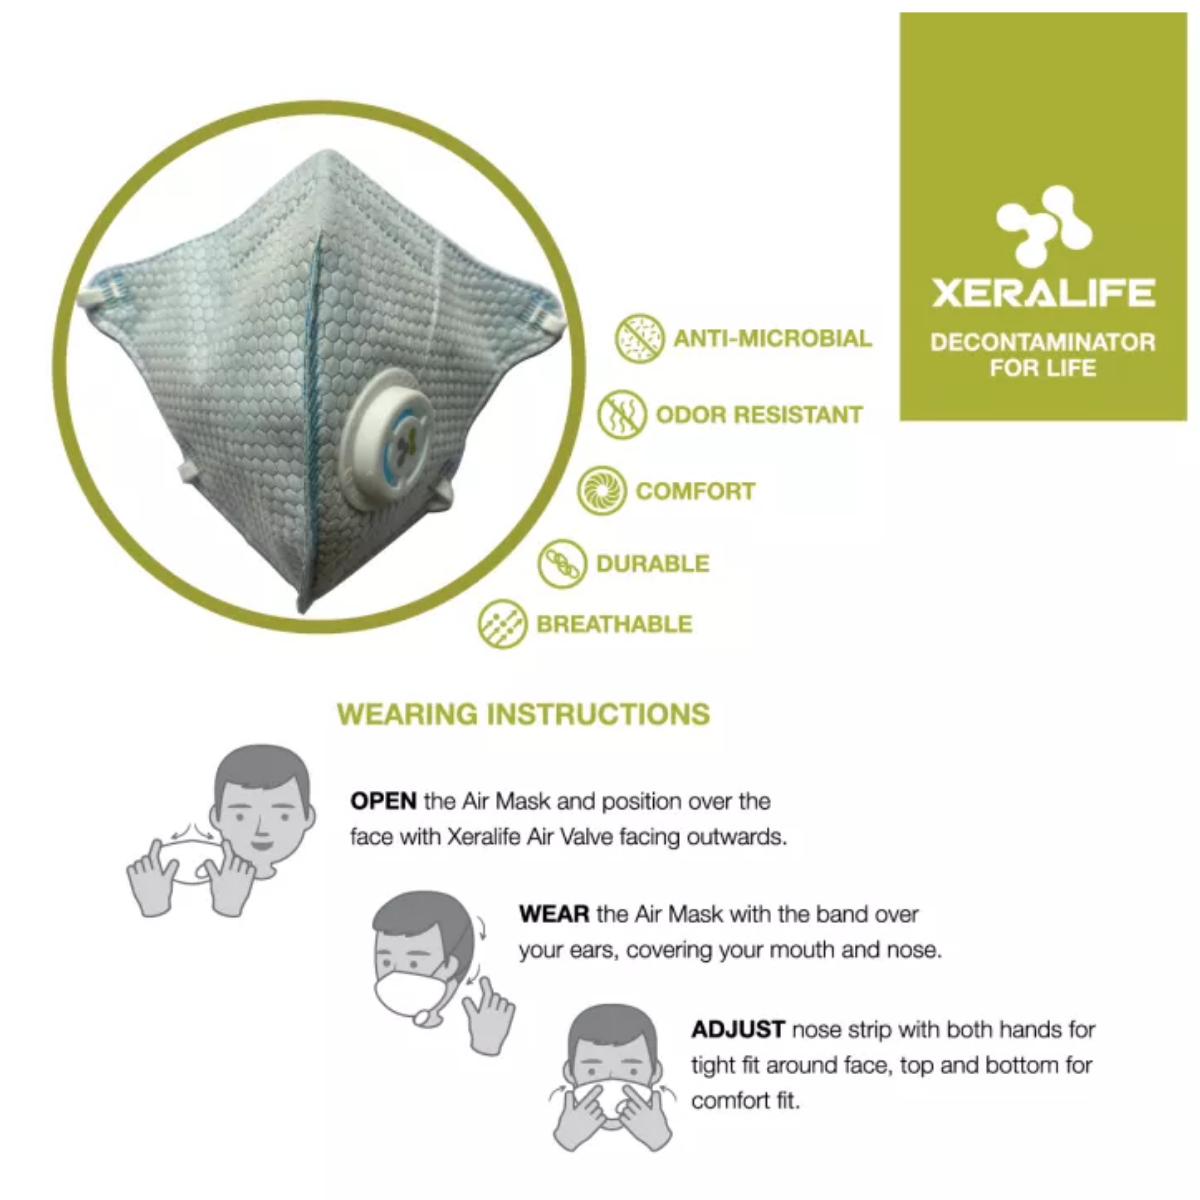 Xeralife Decontaminator Air Mask (3 pcs) - RE:HEALTH